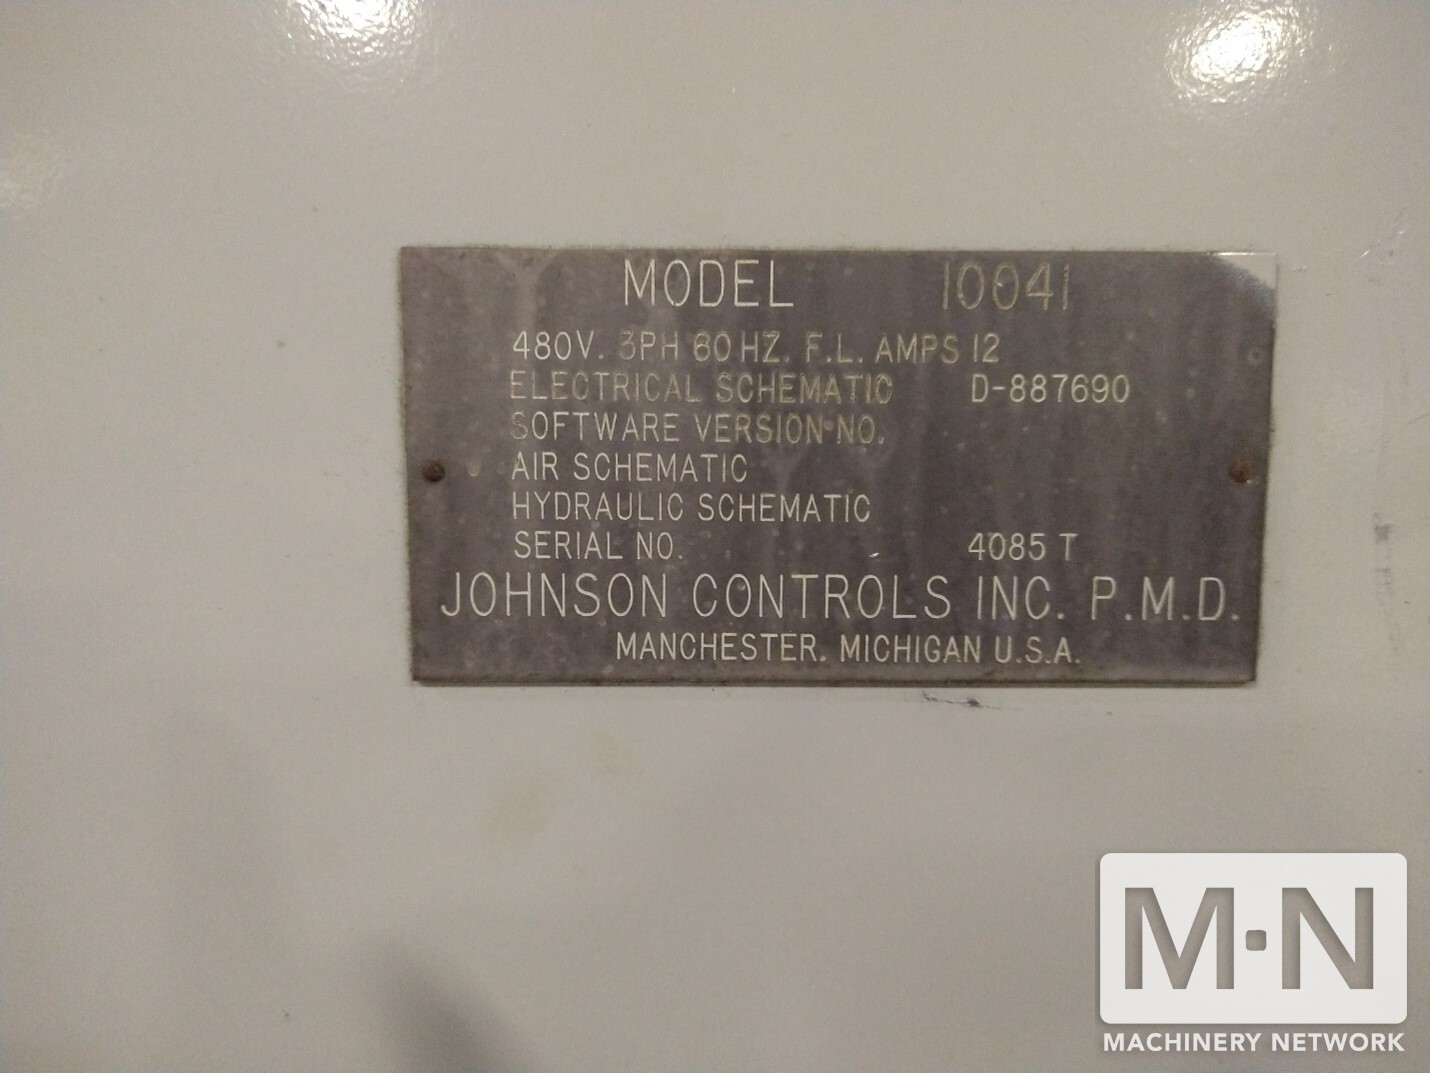 1990 UNILOY 350R-4 BLOW MOLDING MACHINES | Machinery Network Inc.